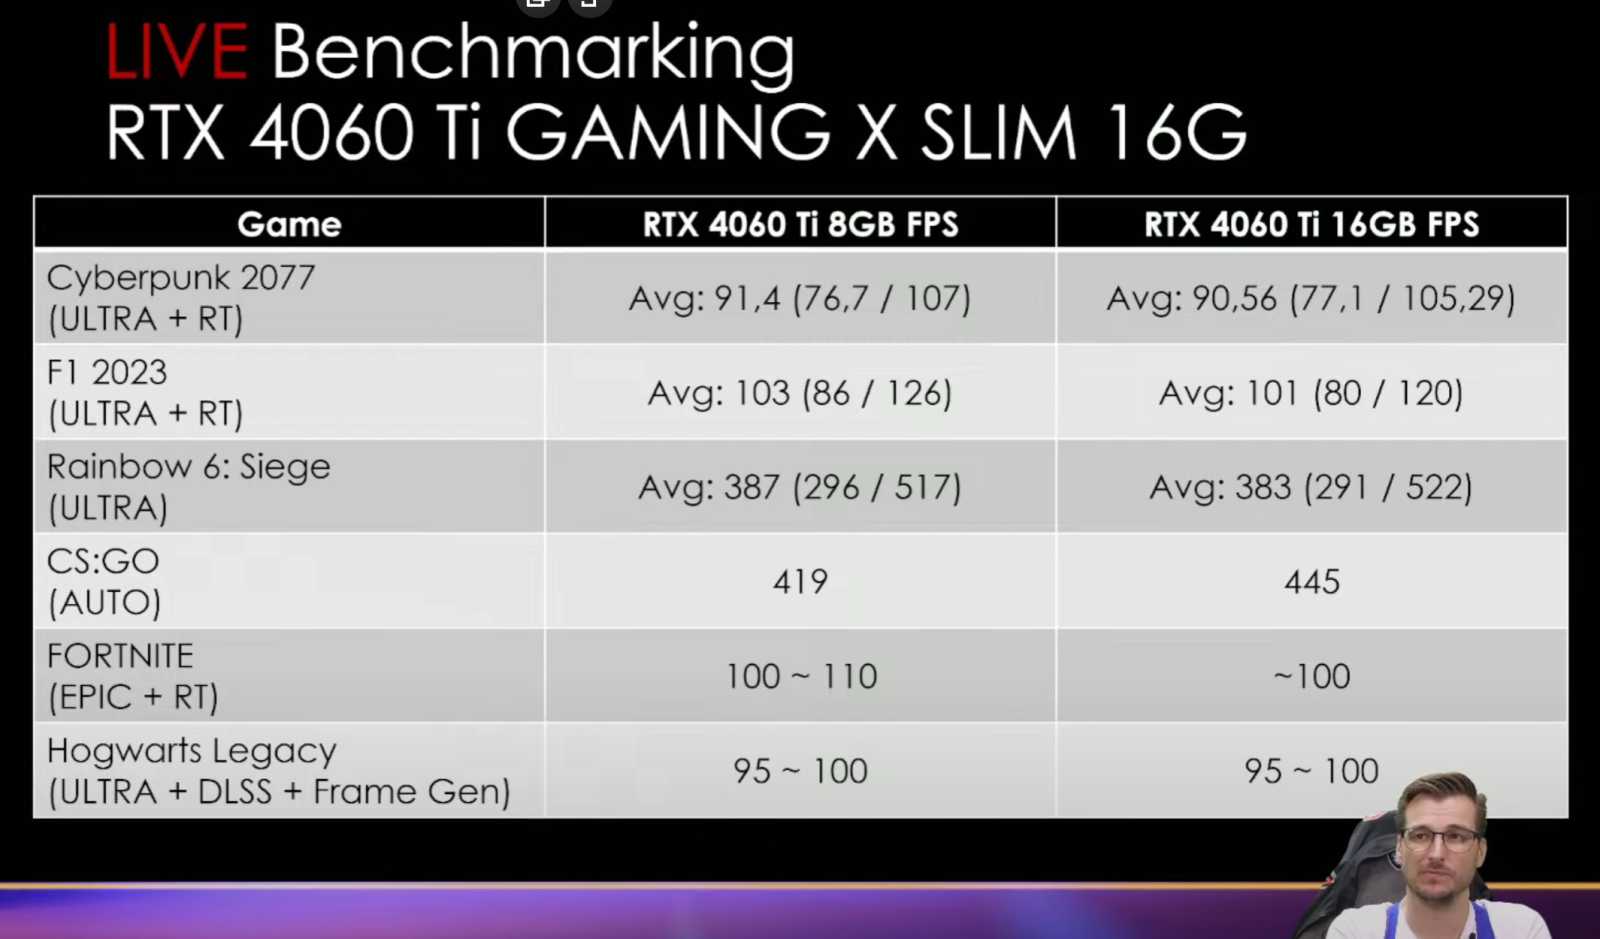 V MSI testovali RTX 4060 Ti 16GB a kupodivu je pomalejší než 8GB model